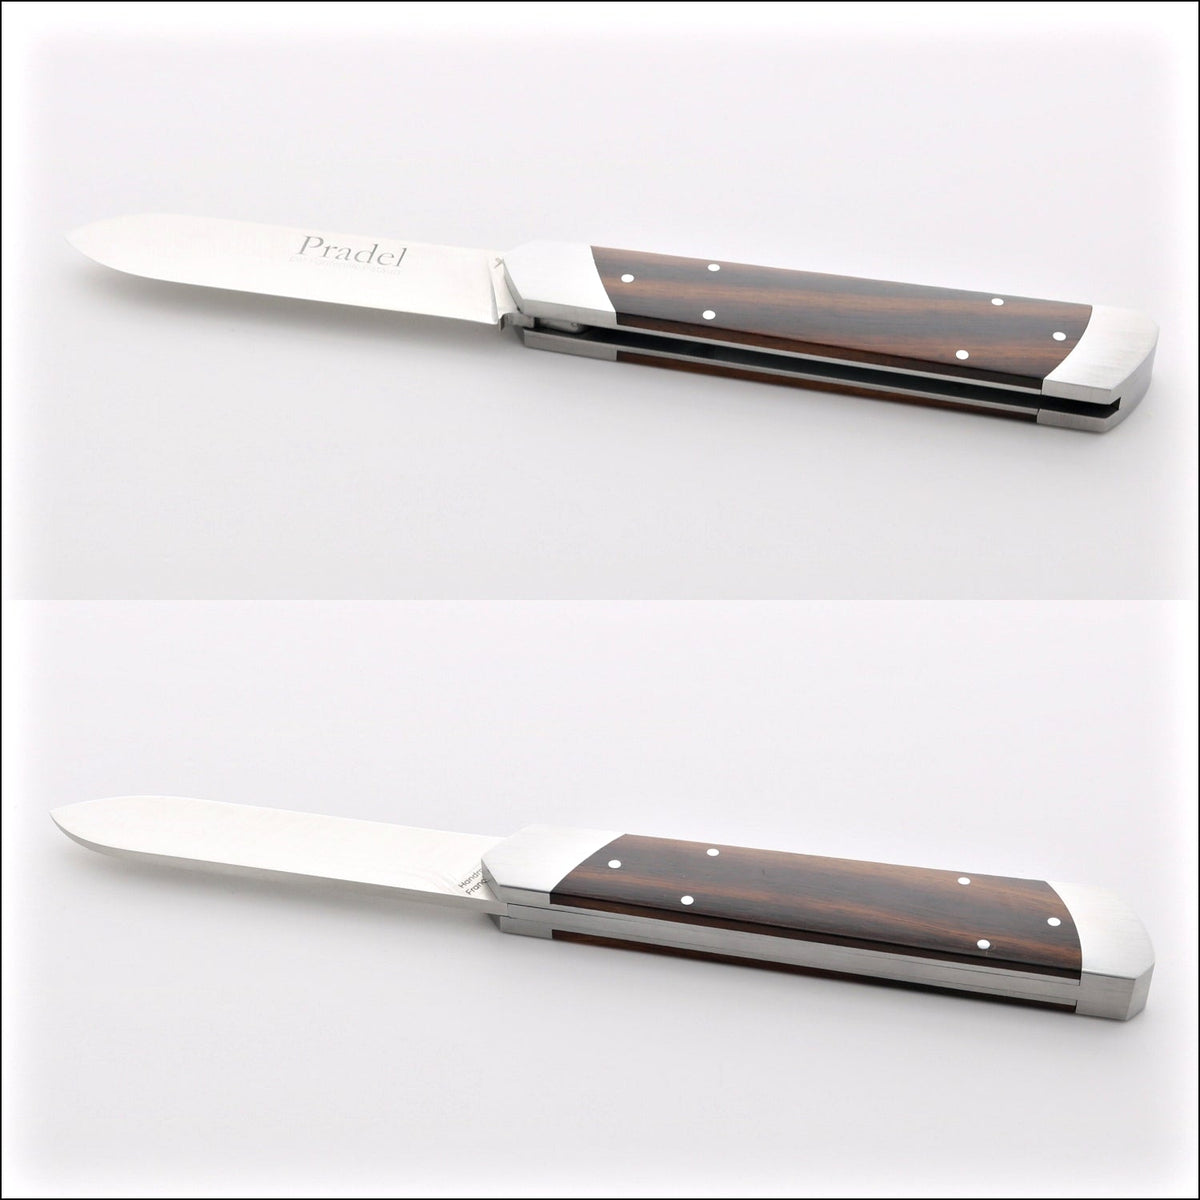 Pradel Folding Knife Desert Ironwood Handle &amp; Lock-Back by Fontenille Pataud